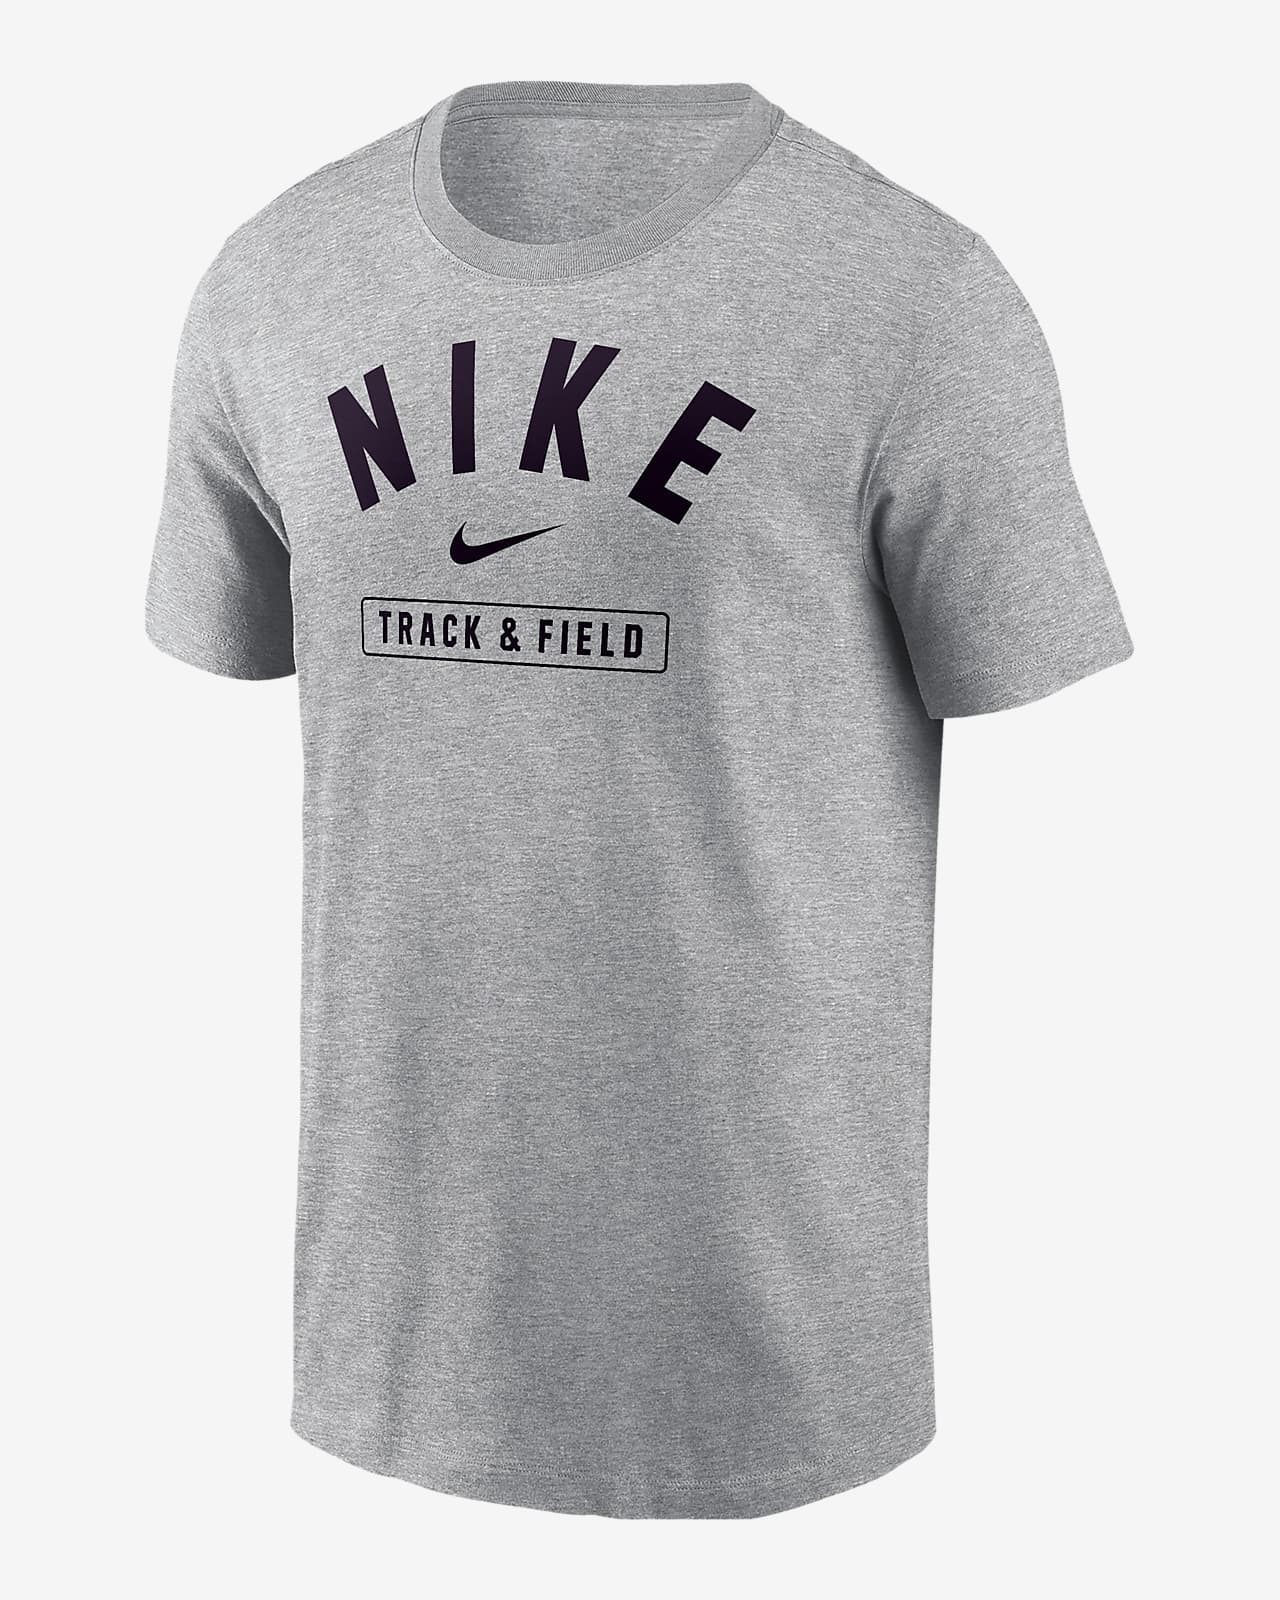 Nike Men's Track & Field T-Shirt